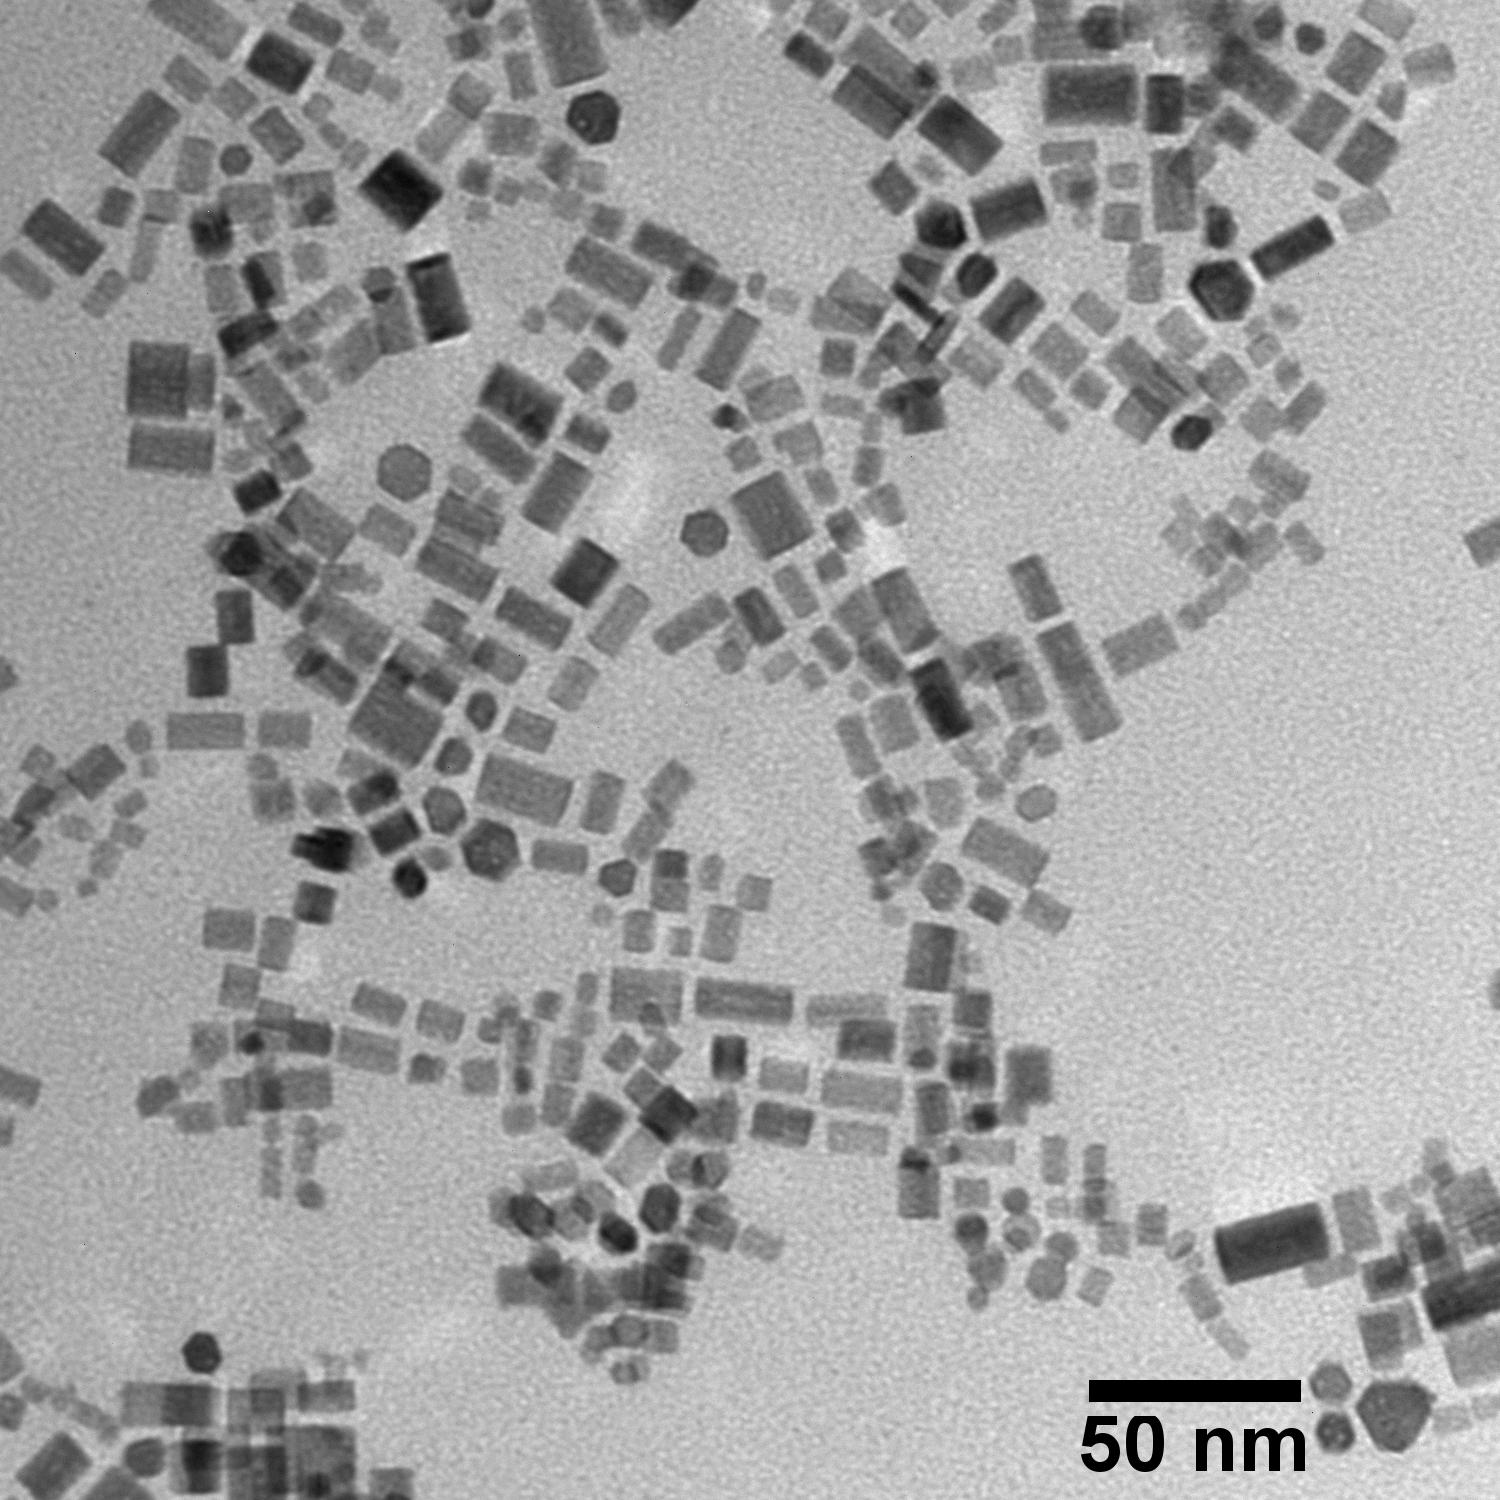 Tungsten oxide nanoparticles